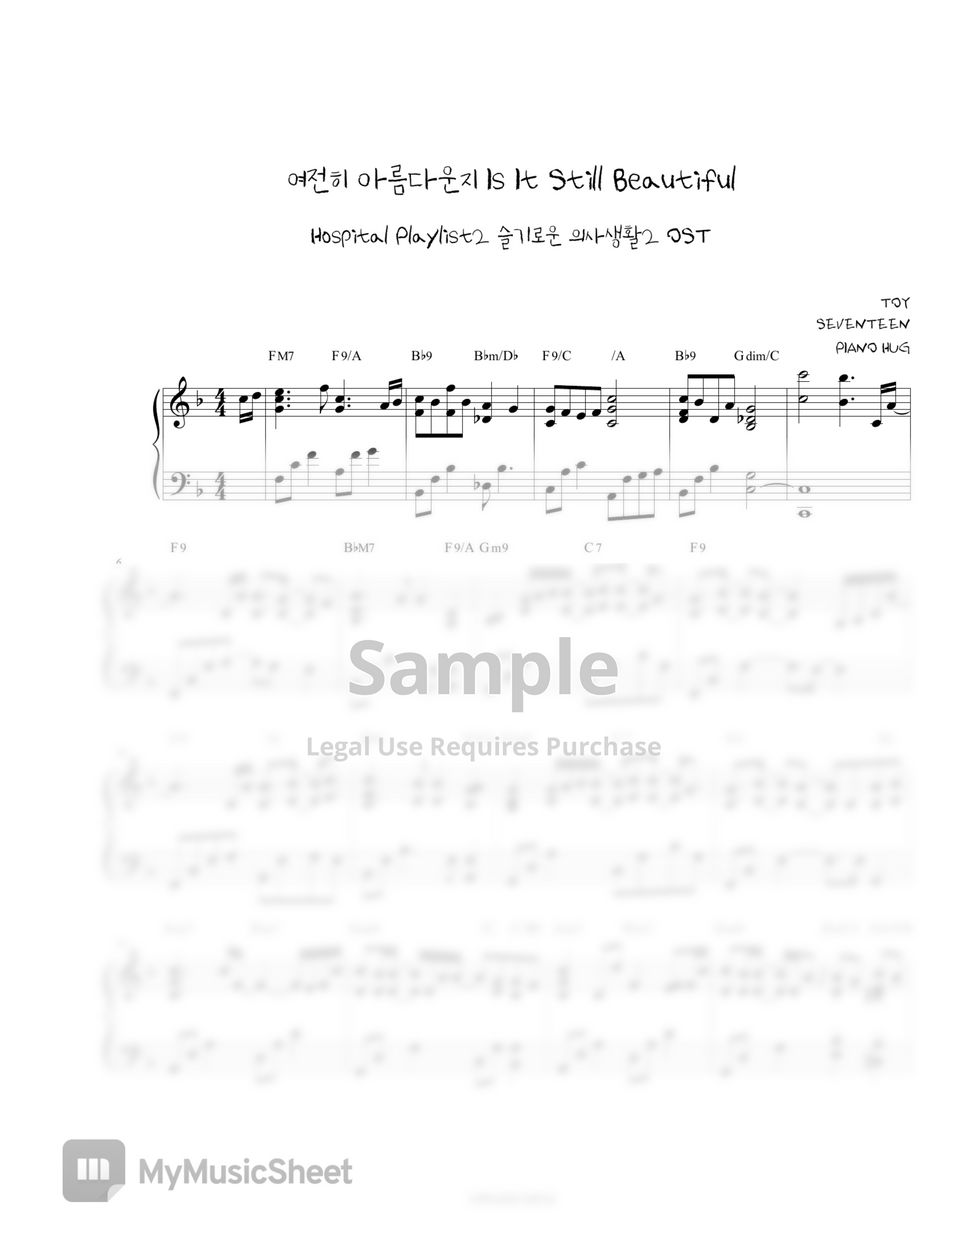 SEVENTEEN - Is It Still Beautiful (Hospital Playlist Season2 OST) by Piano Hug